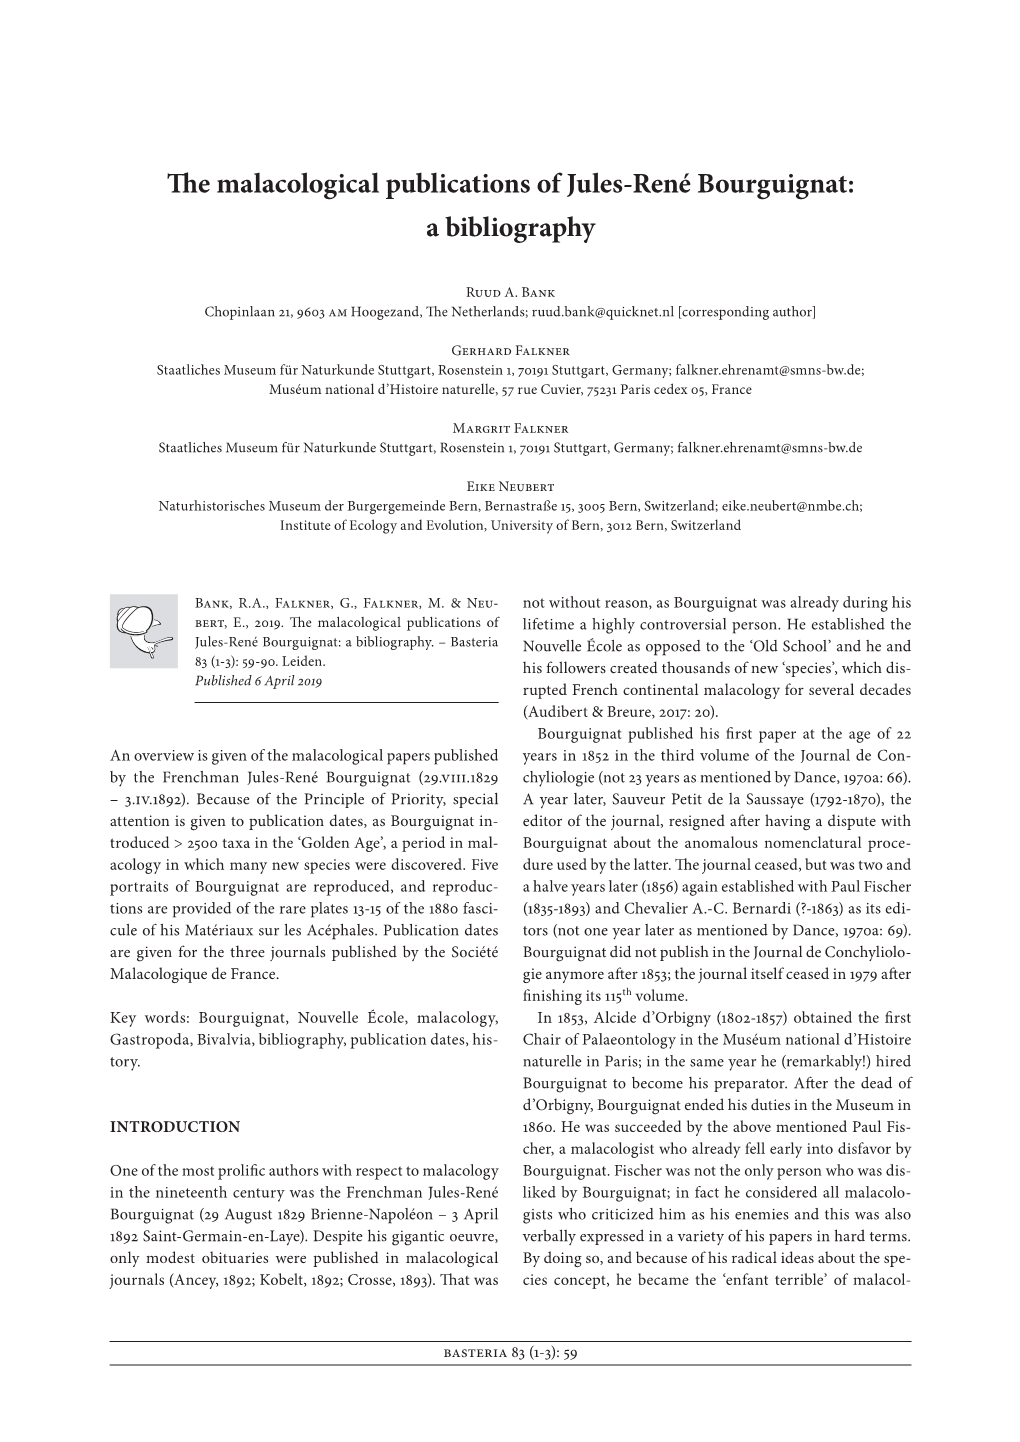 The Malacological Publications of Jules-René Bourguignat: a Bibliography